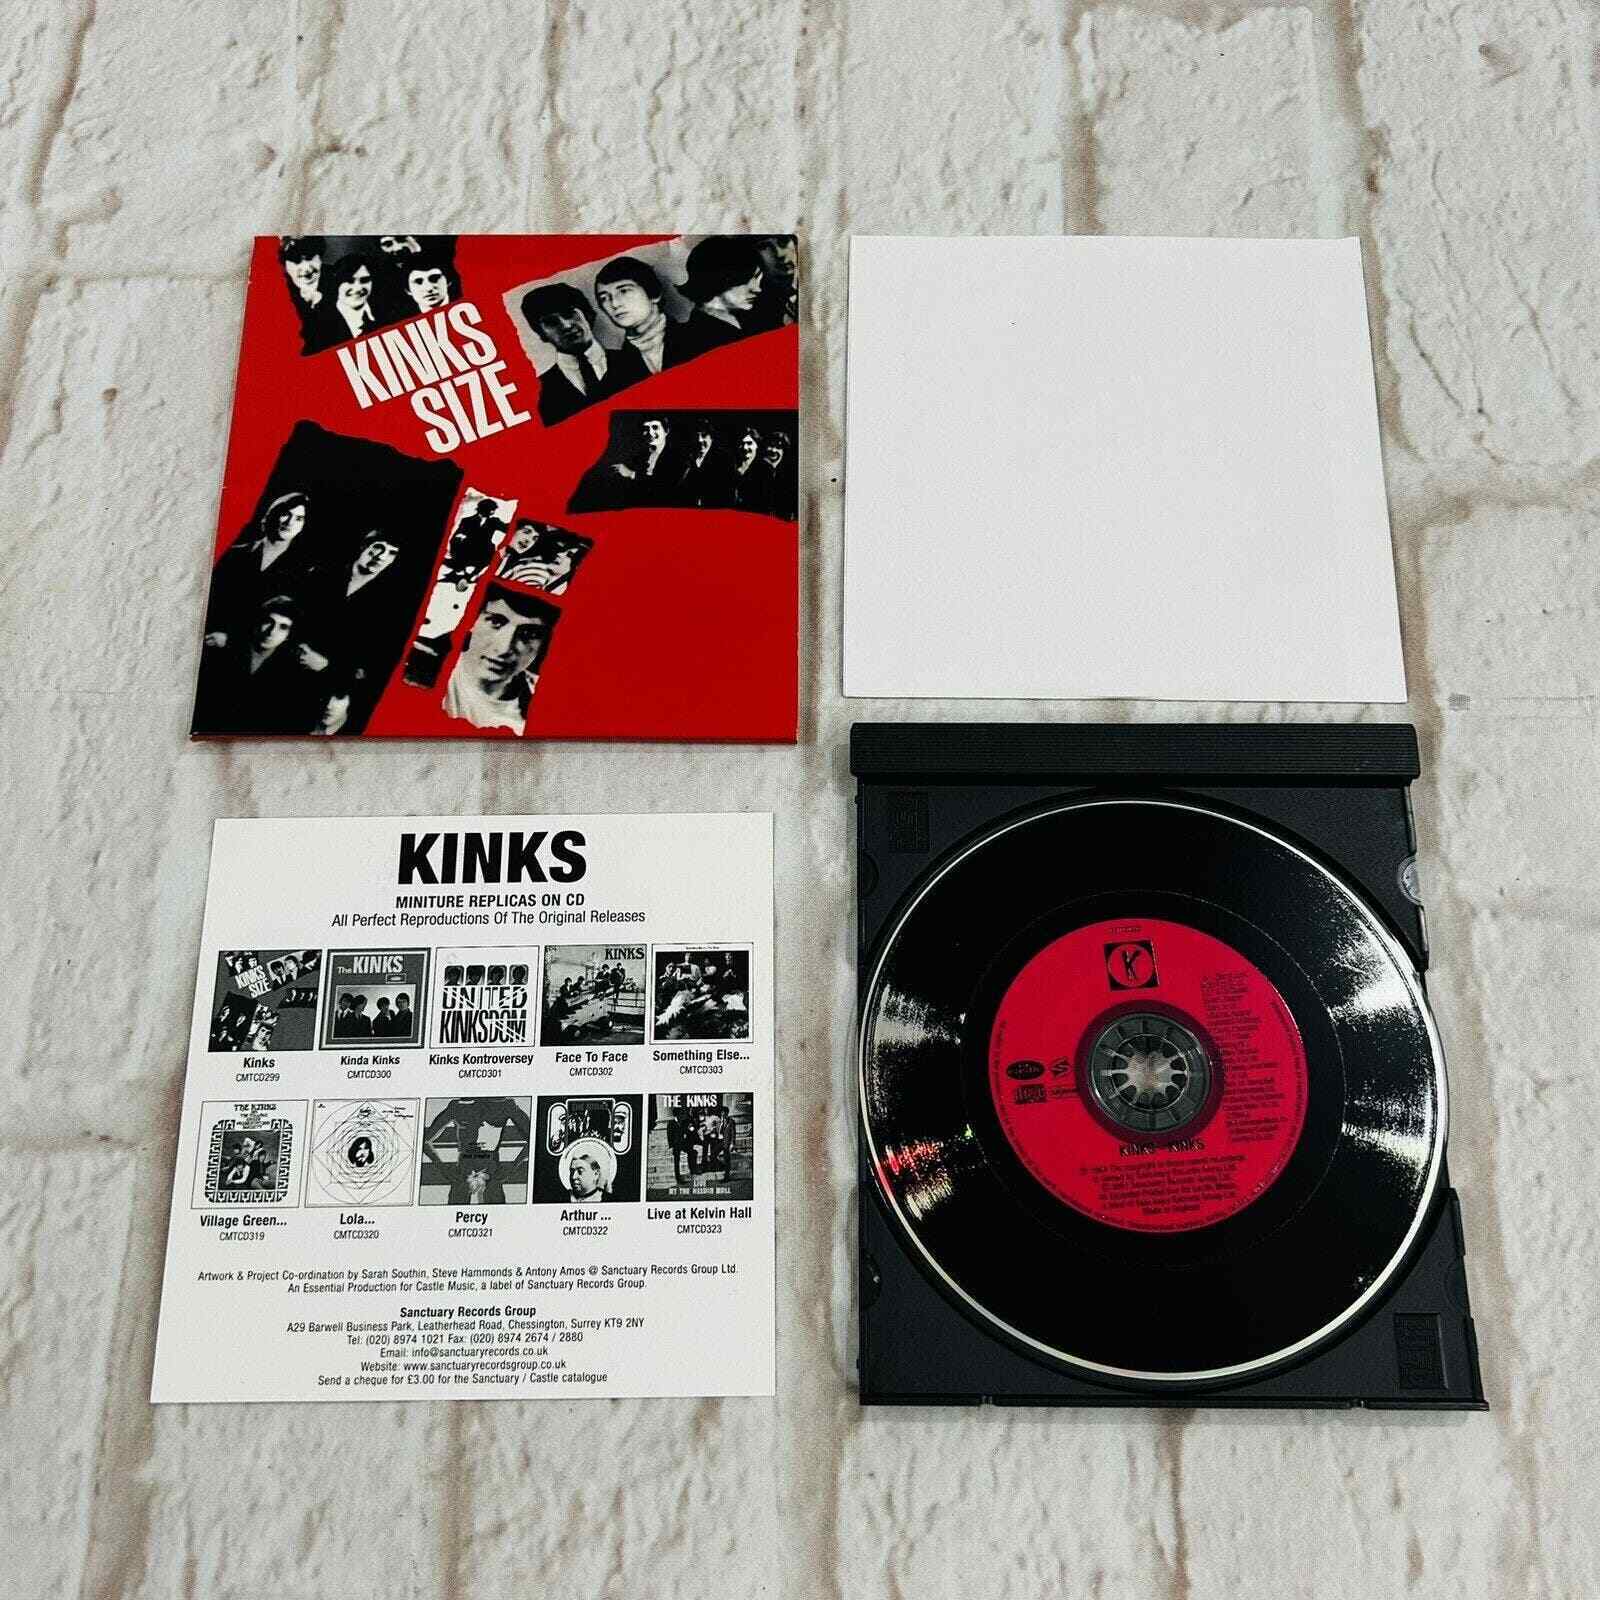 Kinks Kinks Size Made In Japan mini LP CD miniature